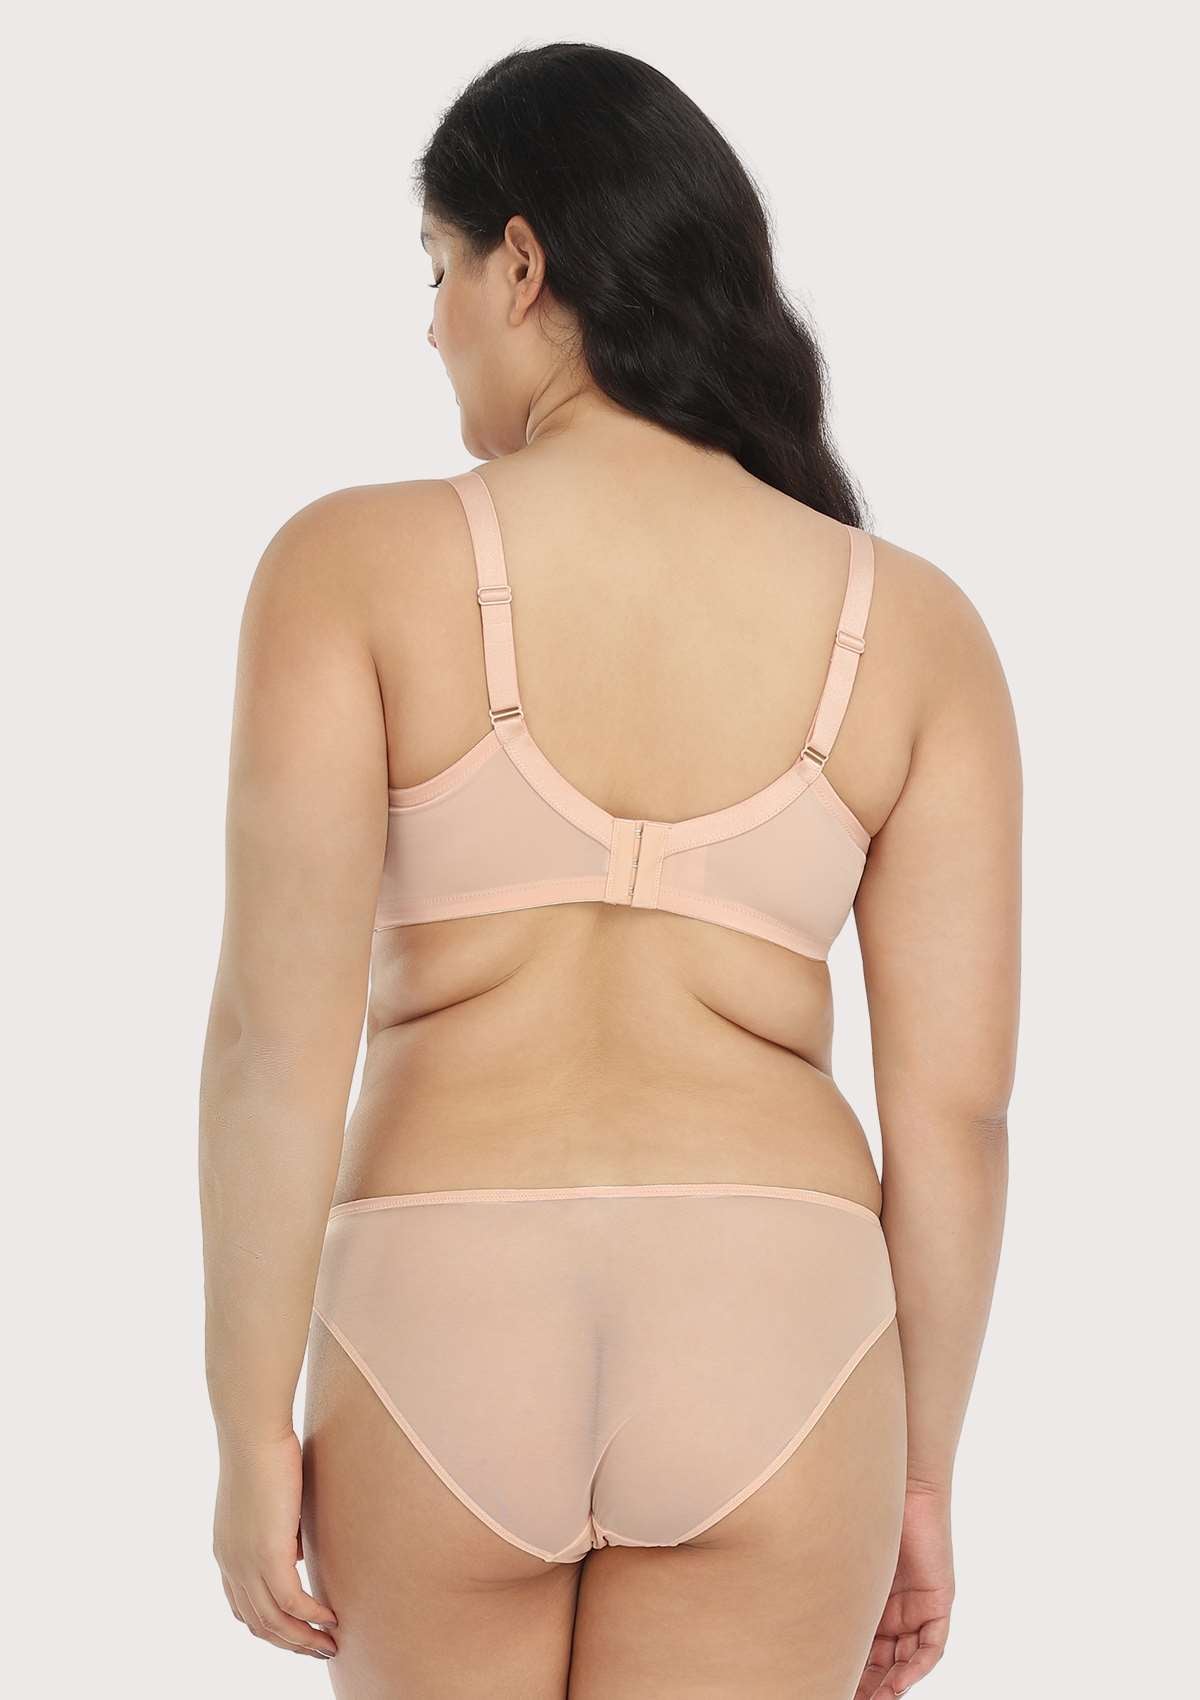 HSIA Sunflower Matching Bra And Panties Set: Comfortable Plus Size Bra - Pink / 36 / H